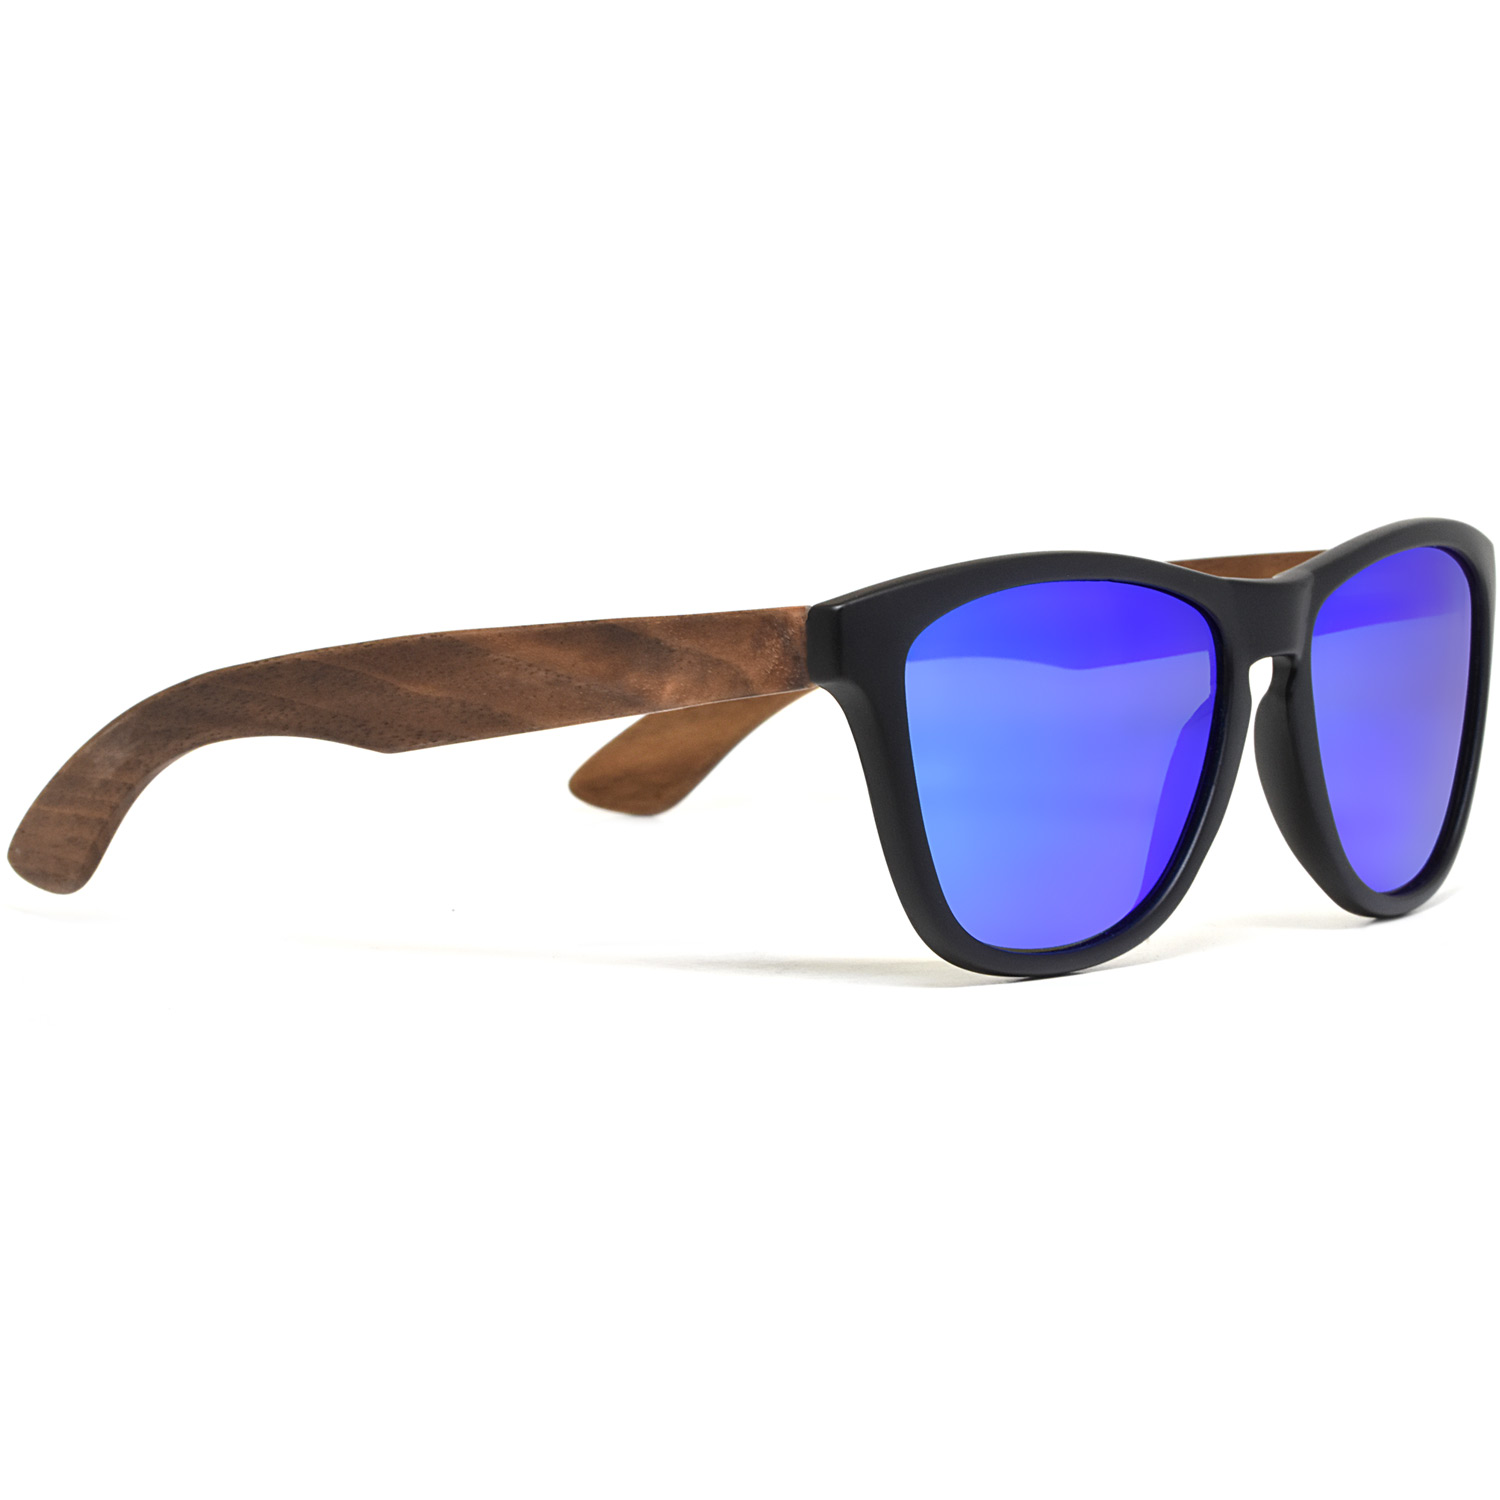 Classic walnut wood sunglasses blue mirrored polarized lenses